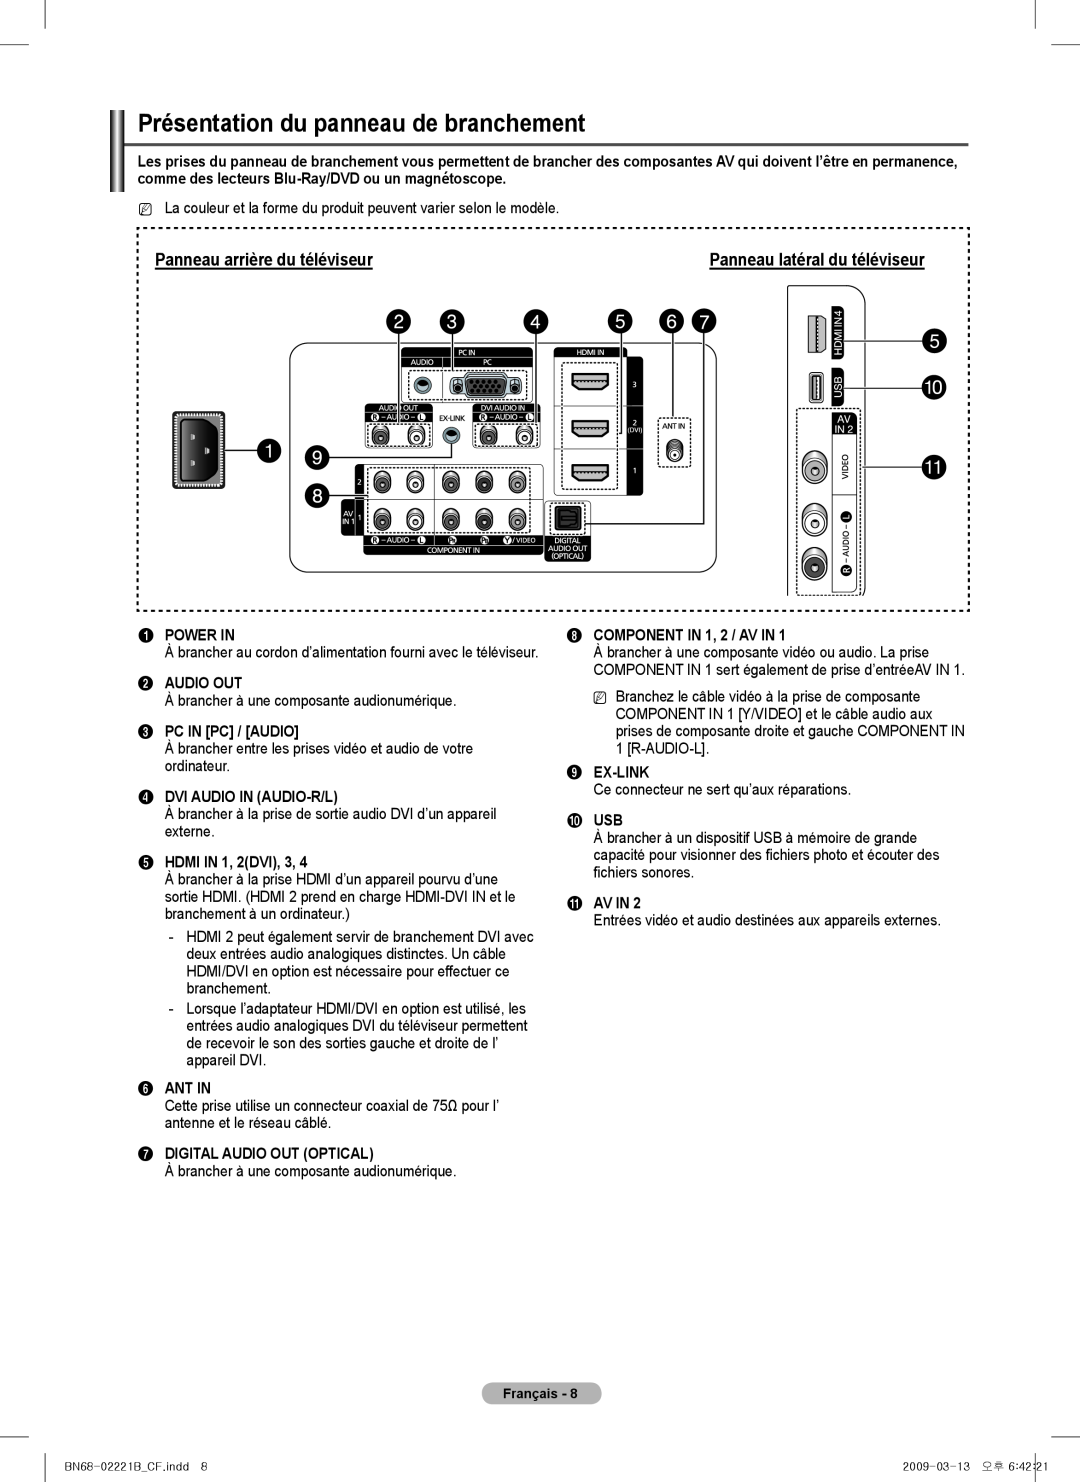 Samsung PN6B590T5F Panneau arrière du téléviseur, Power In, Audio Out, Pc In Pc / Audio, Dvi Audio In Audio-R/L, Ant In 